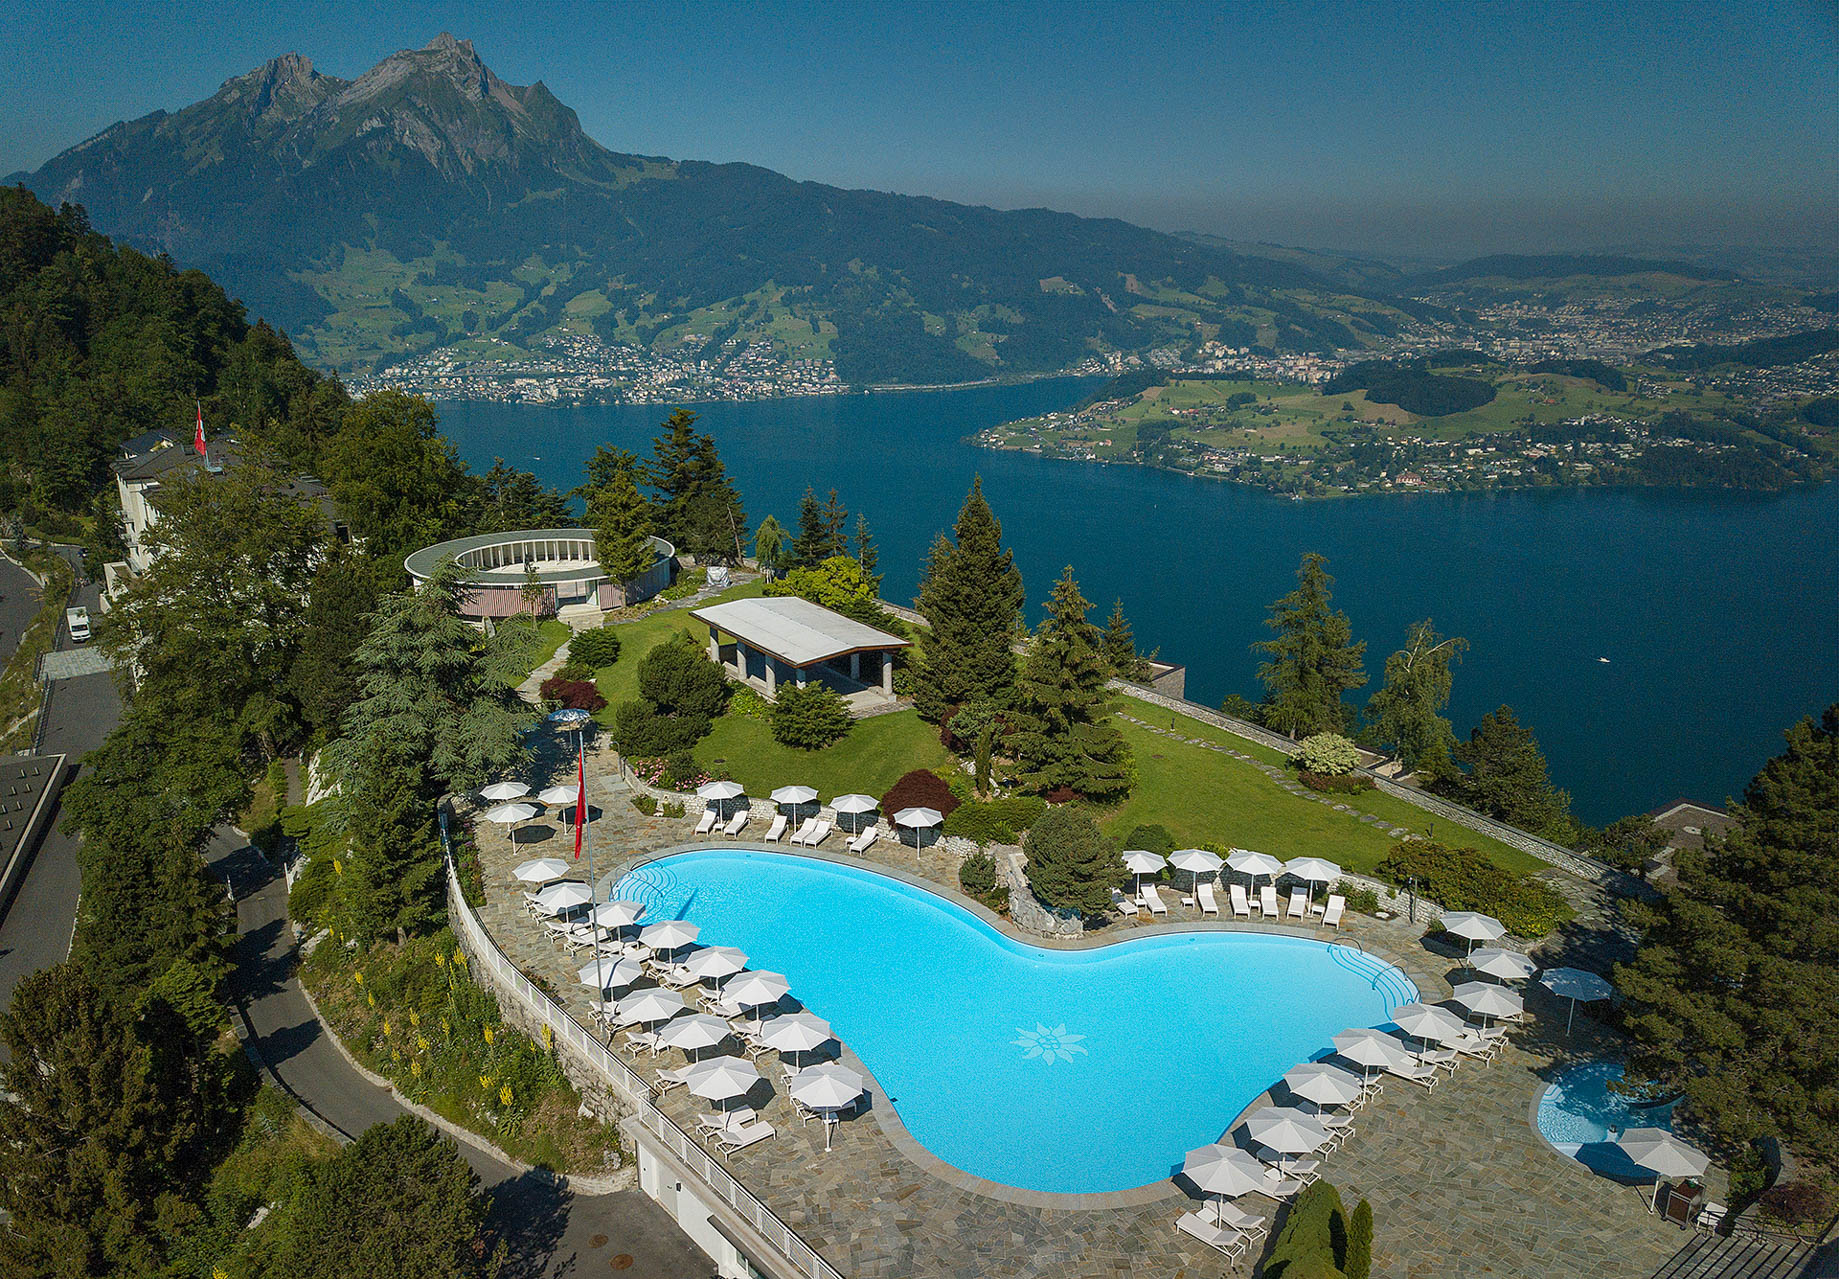 Burgenstock Hotel & Alpine Spa – Obburgen, Switzerland – Pool Aerial View